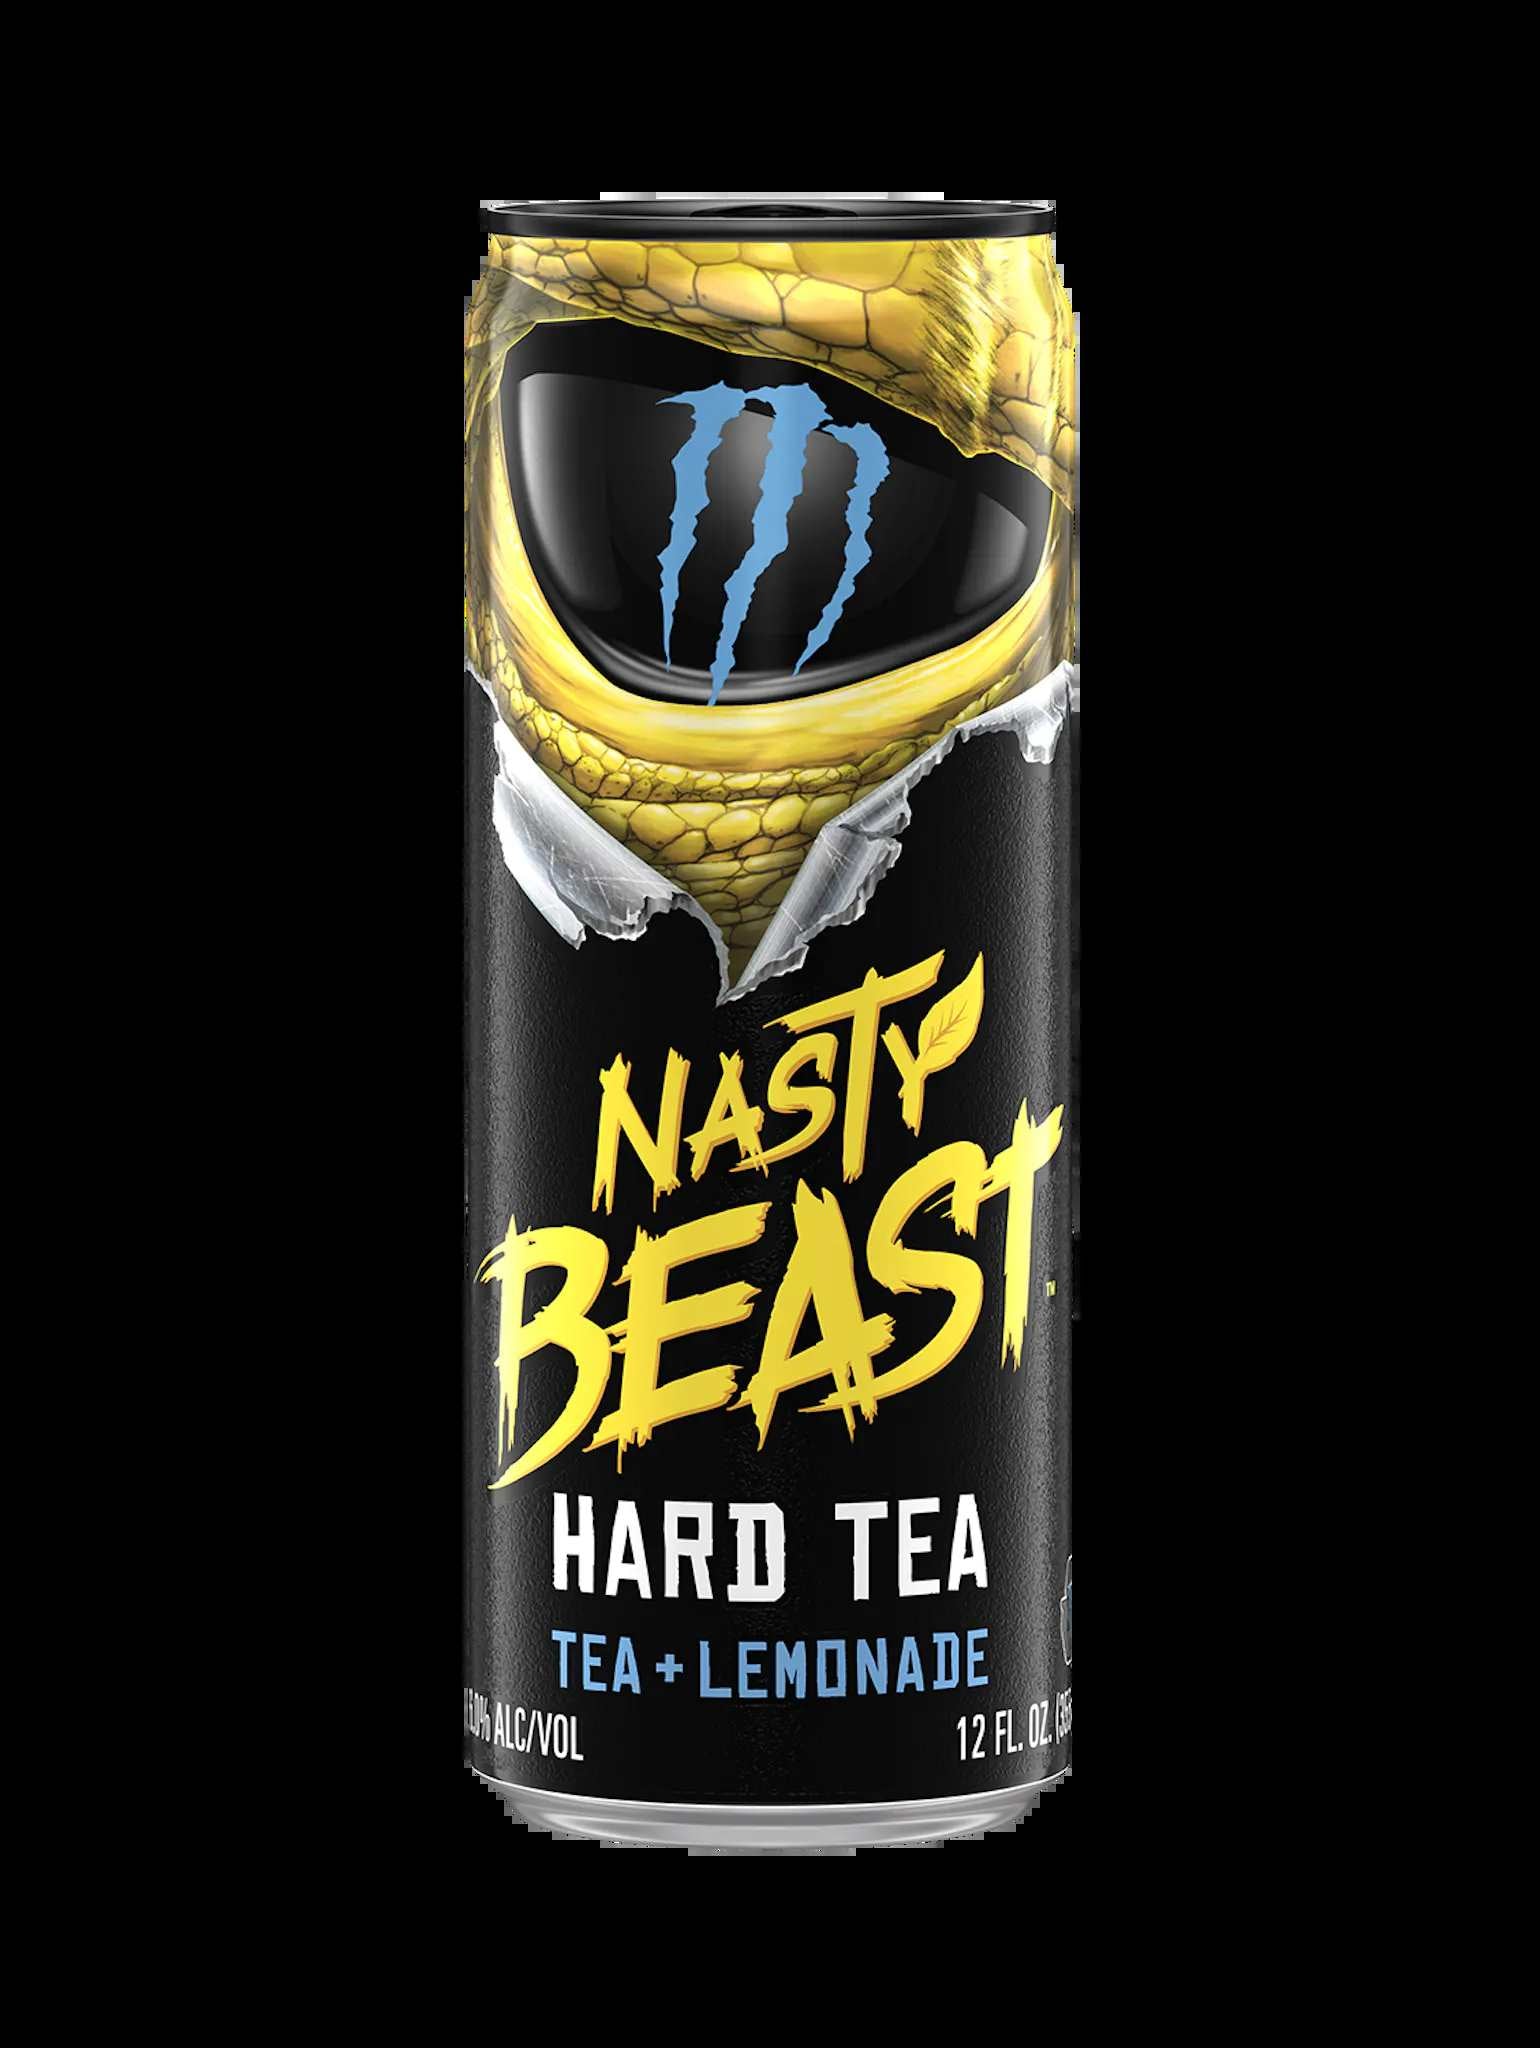 Monster Nasty Beast Hard Tea Lemonade 355 ml FULL beast beast unleashed beast24 hard tea monster monster energy nasty nasty beast newest not-on-sale unleashed usa